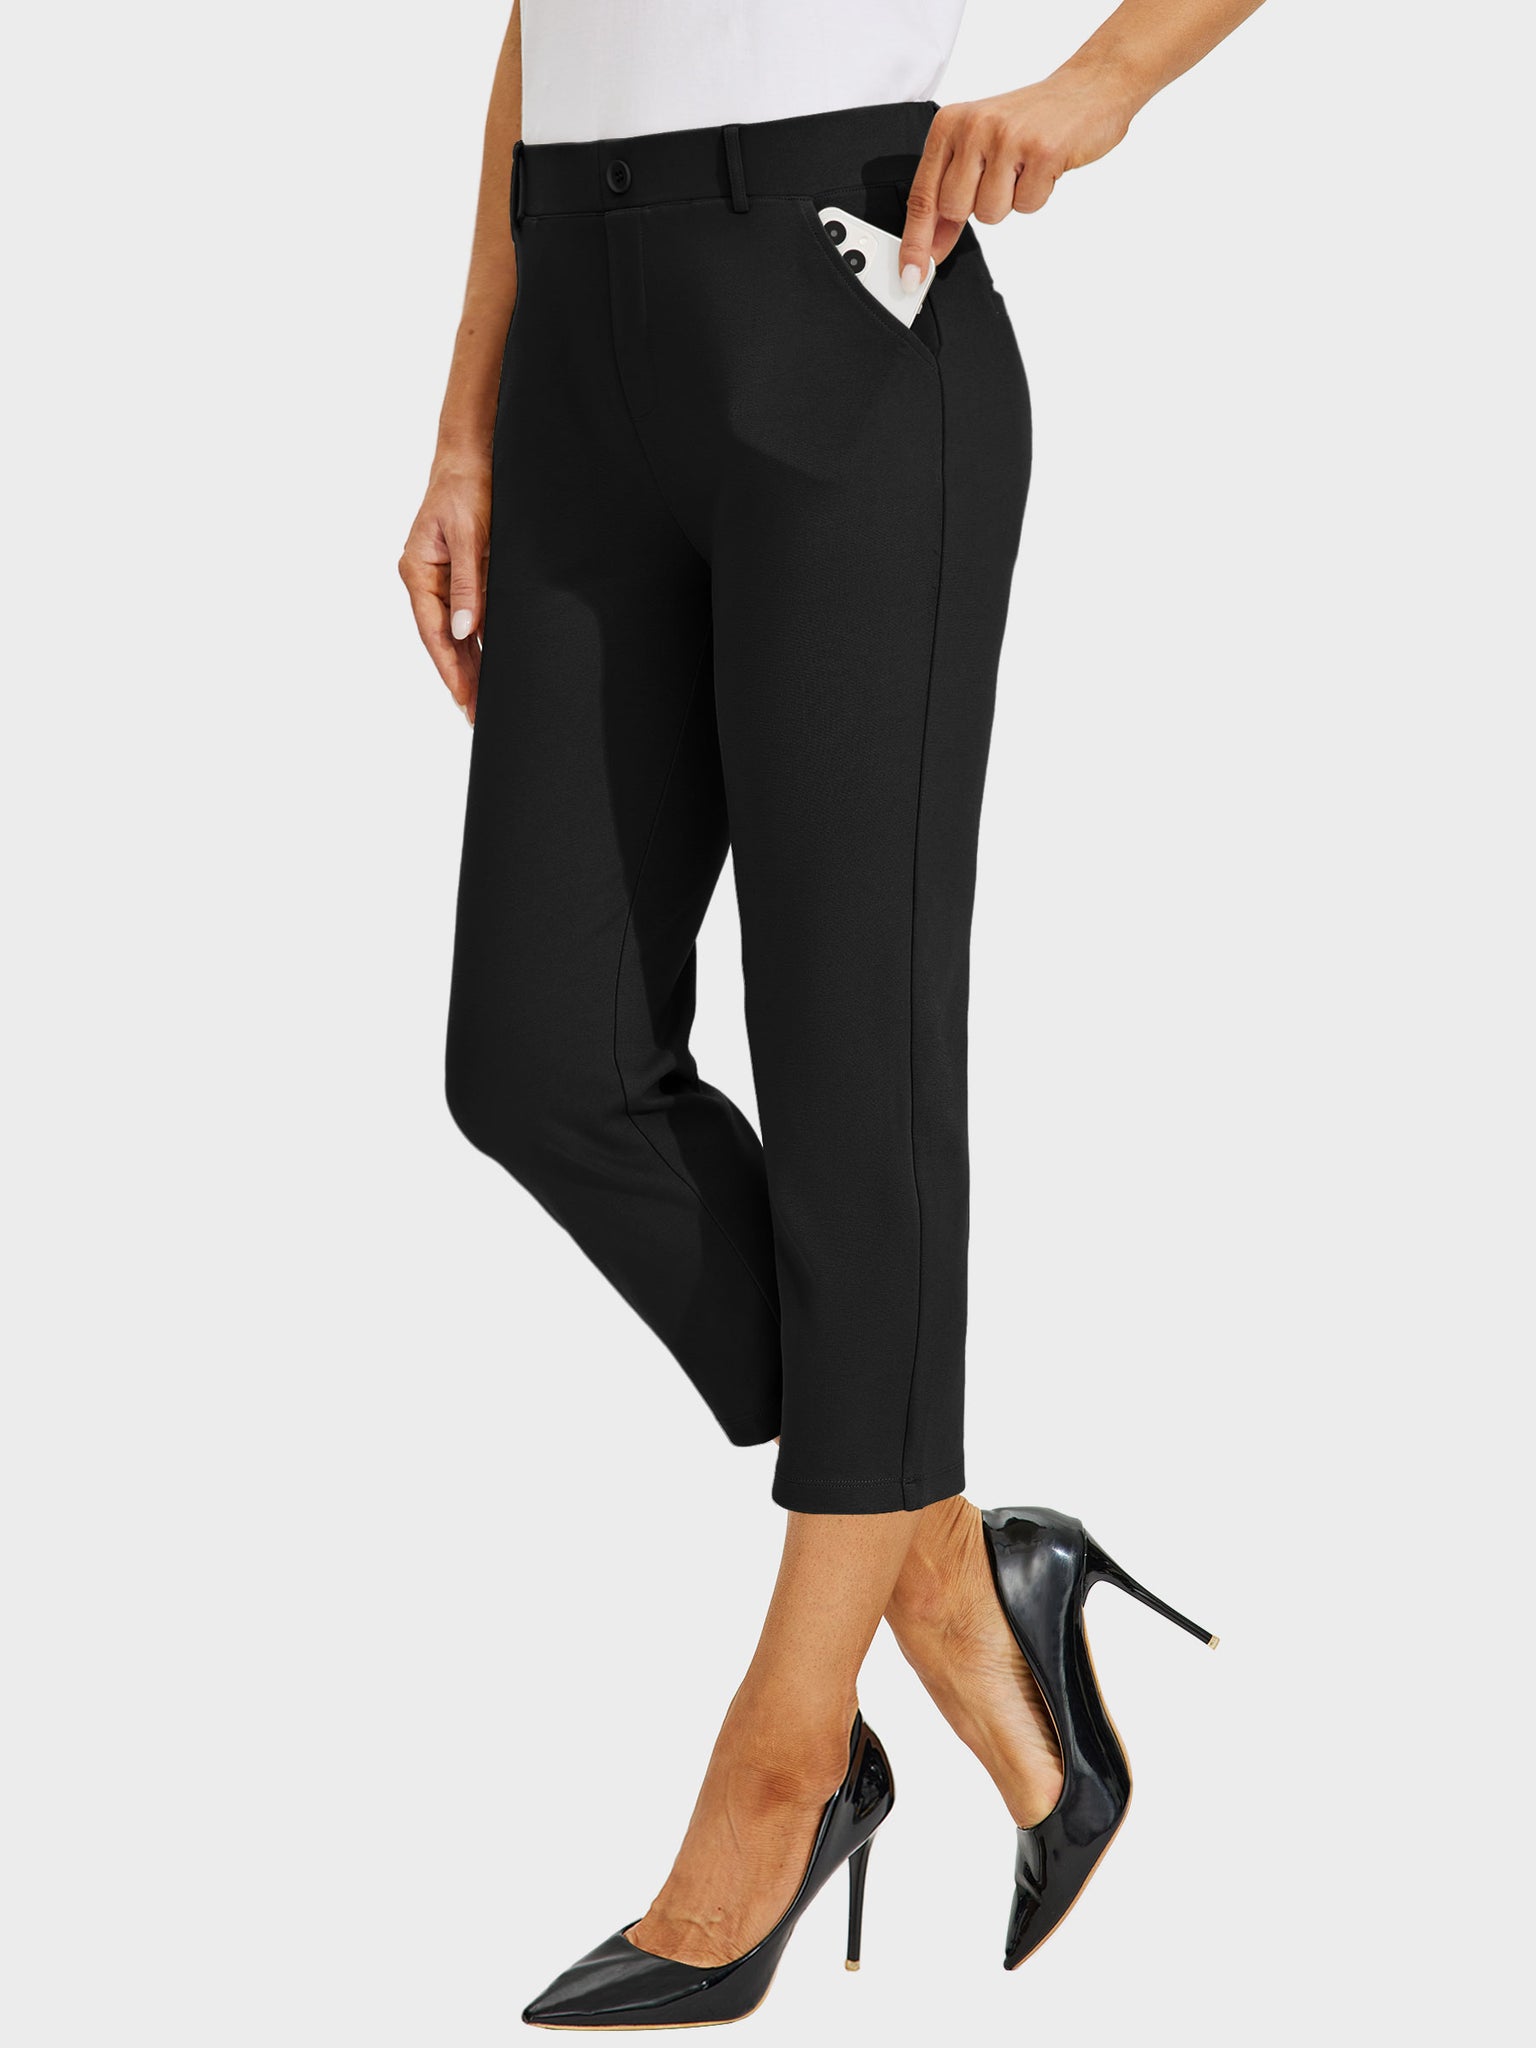 Women's Stretch Capri Yoga Dress Pants_Black_model3